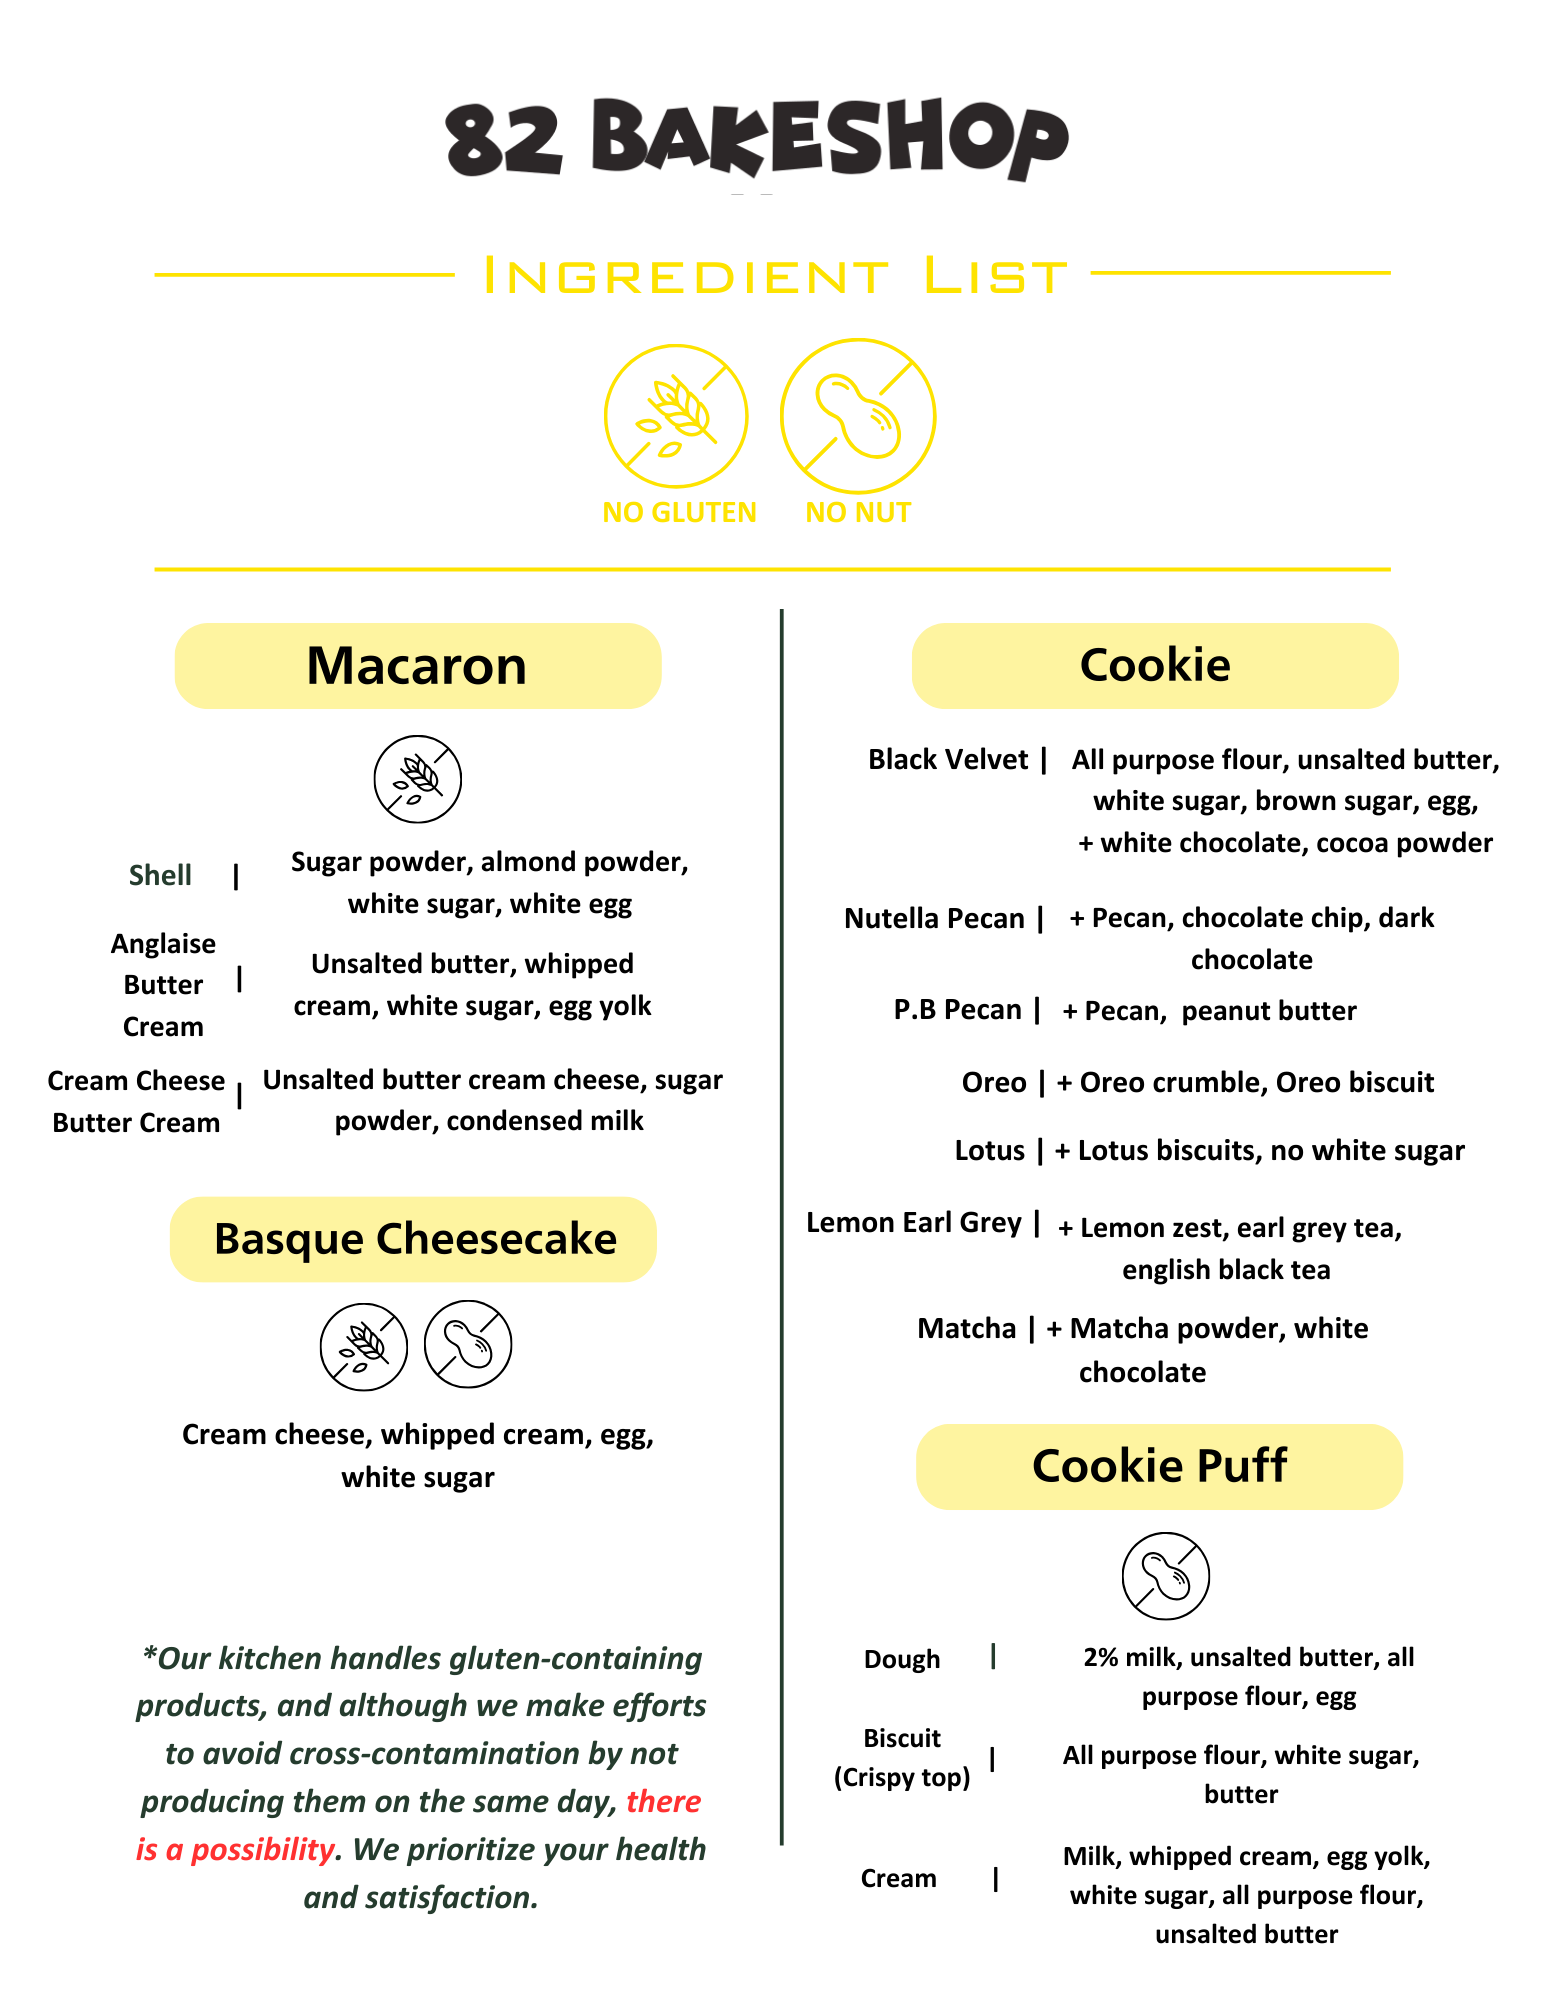 82 BAKESHOP Ingredient List